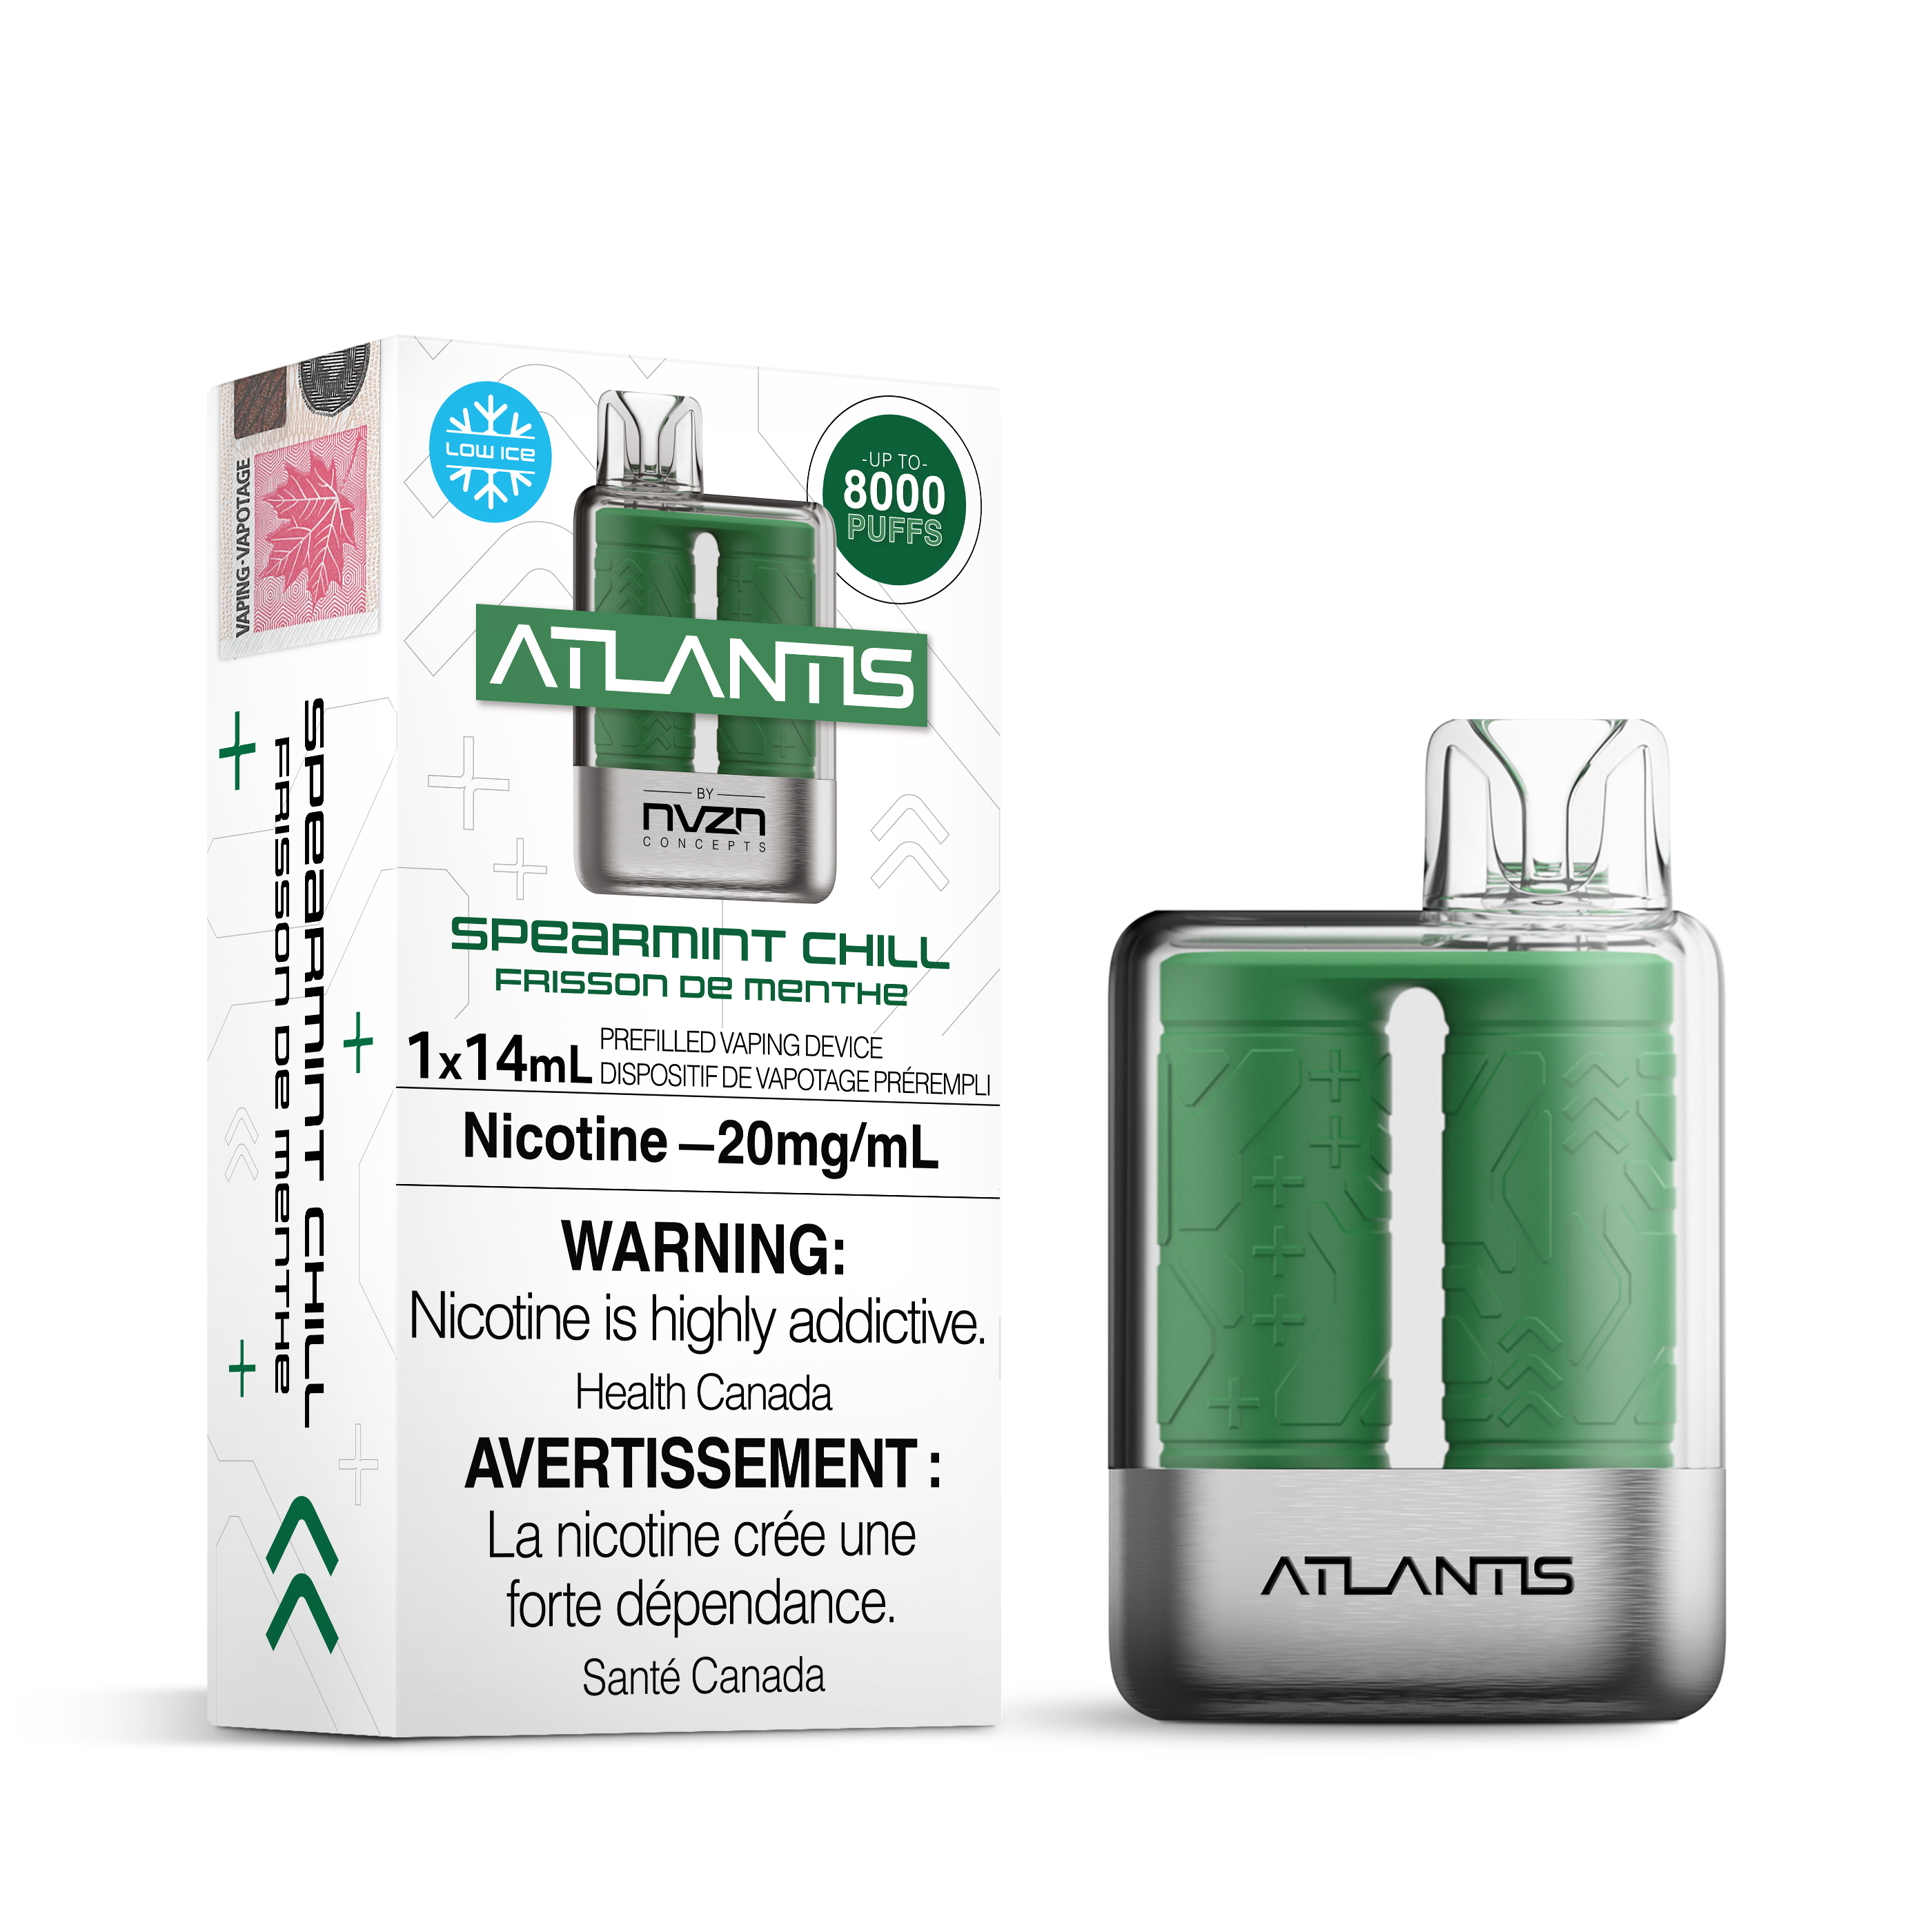 ATLANTIS 8K Spearmint Chill 20mg